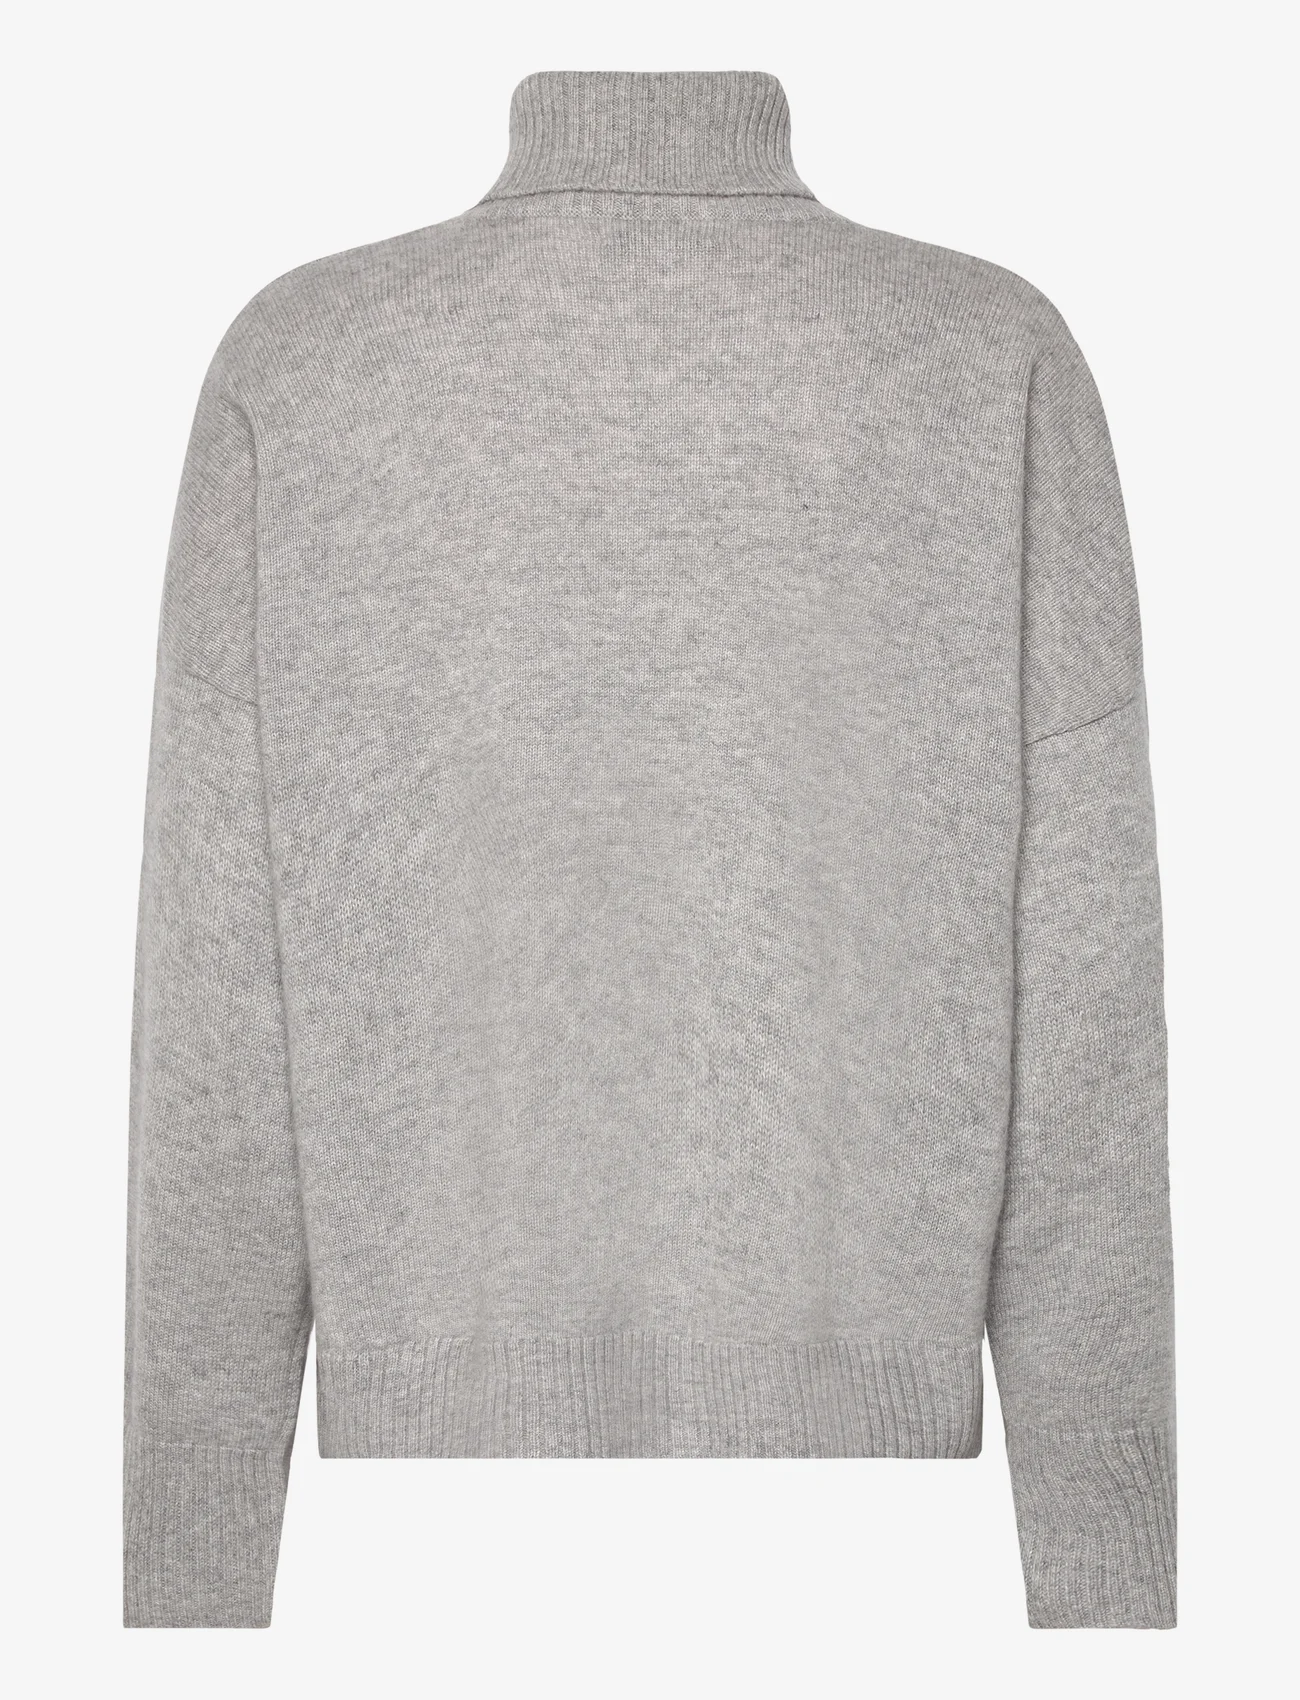 Davida Cashmere - Chunky Roll Neck Sweater - kõrge kaelusega džemprid - light grey - 1